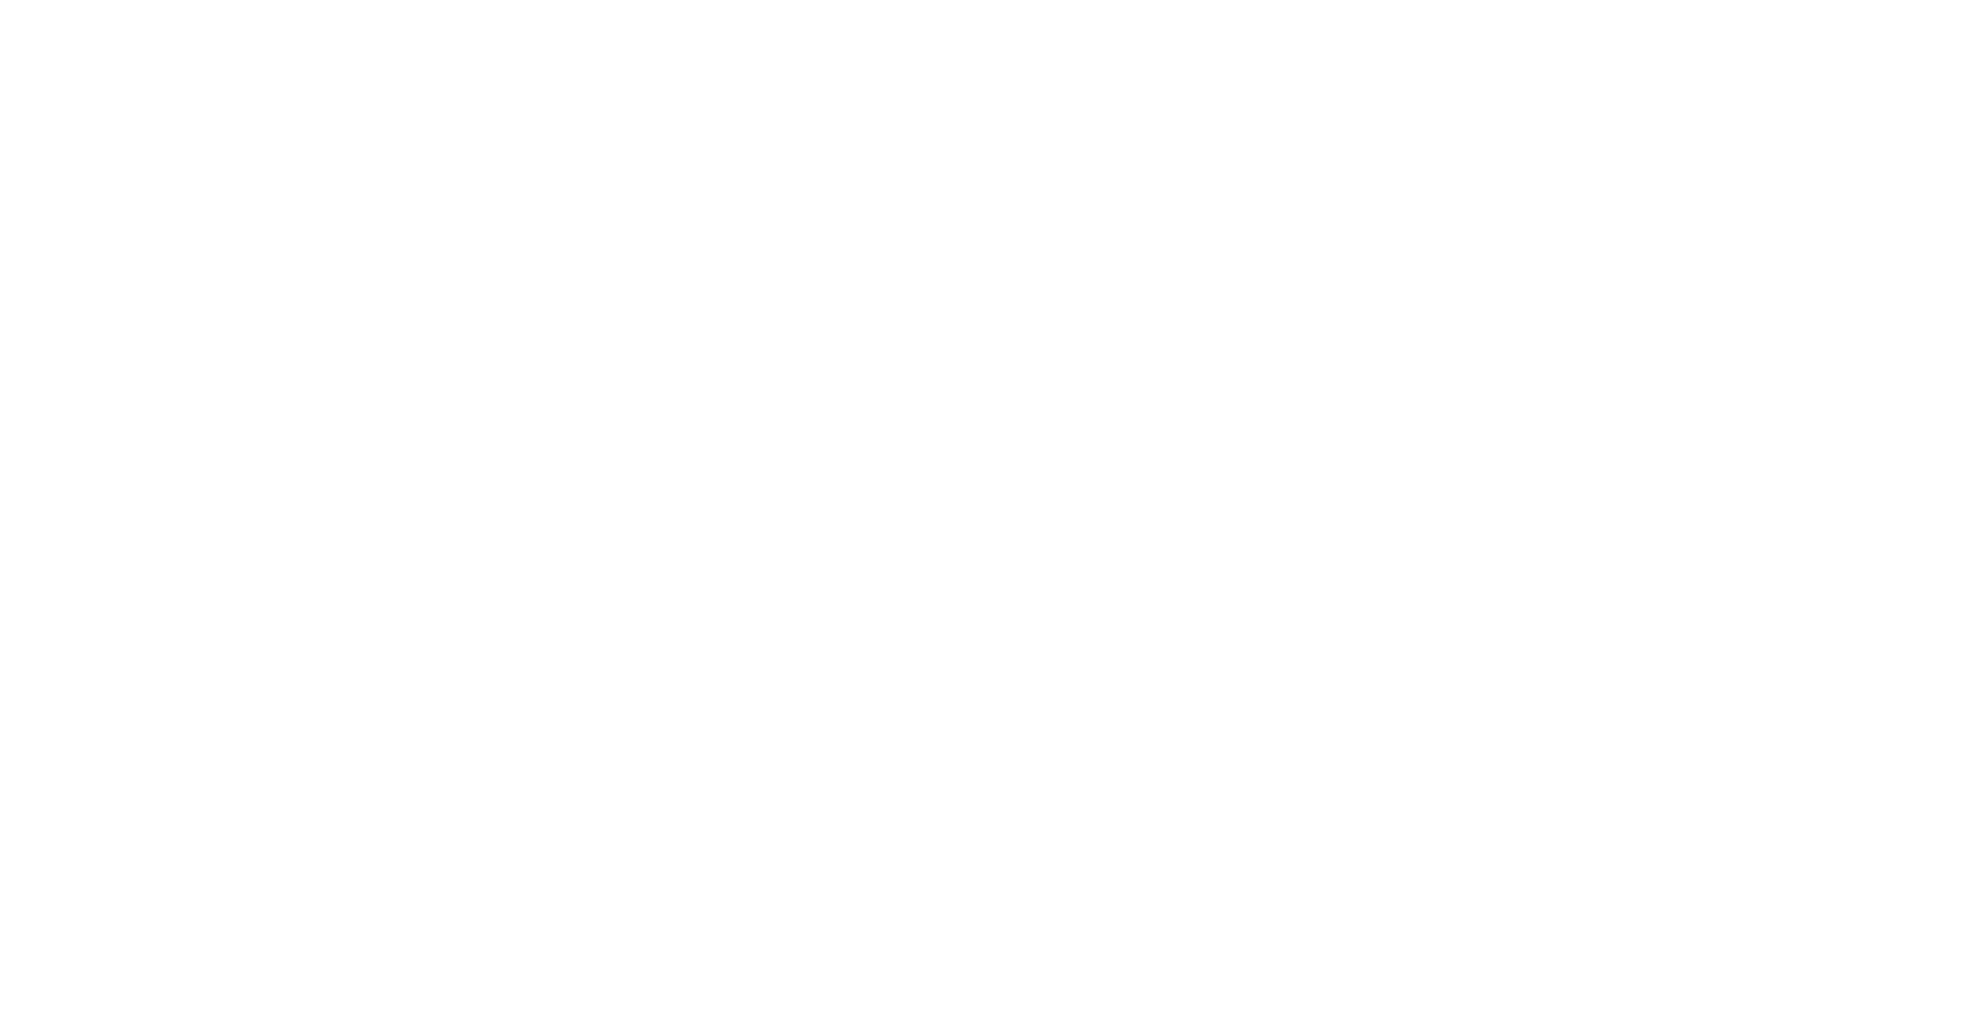 Make-Up Studio Training Center